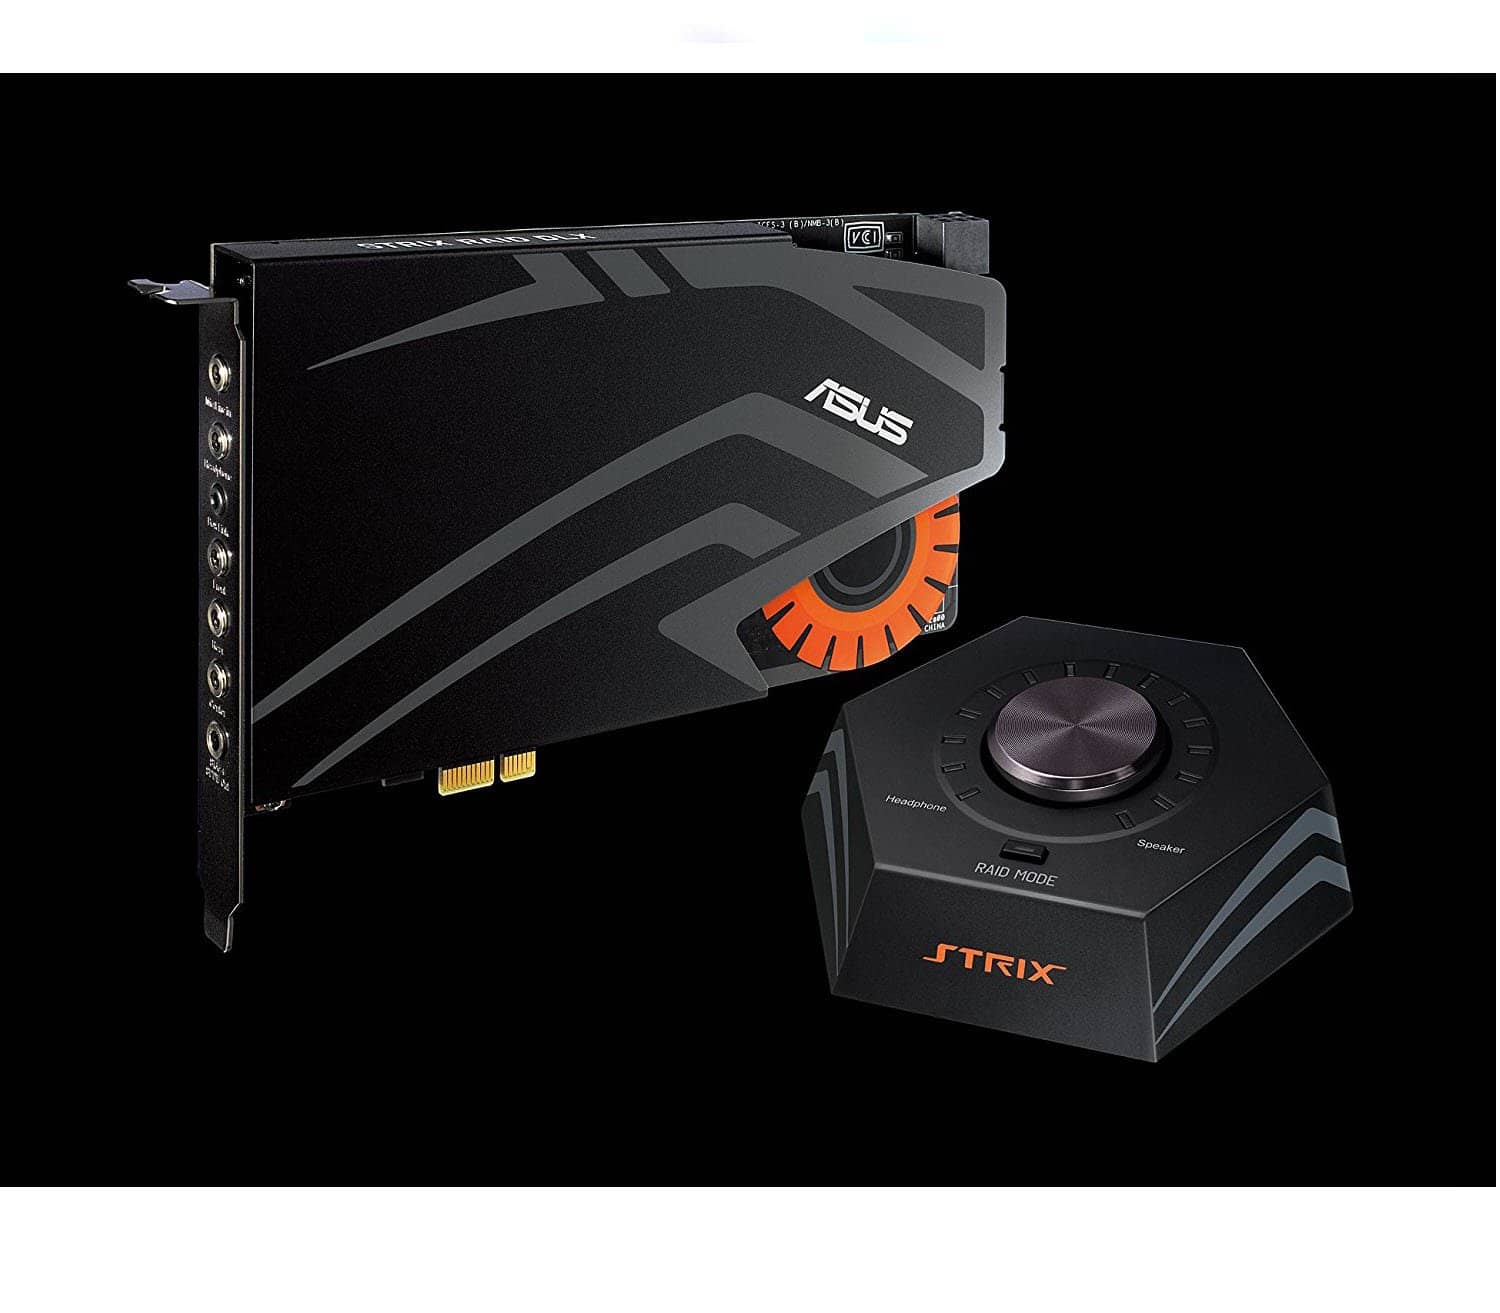 Asus STRIX RAID DLX Sound Card